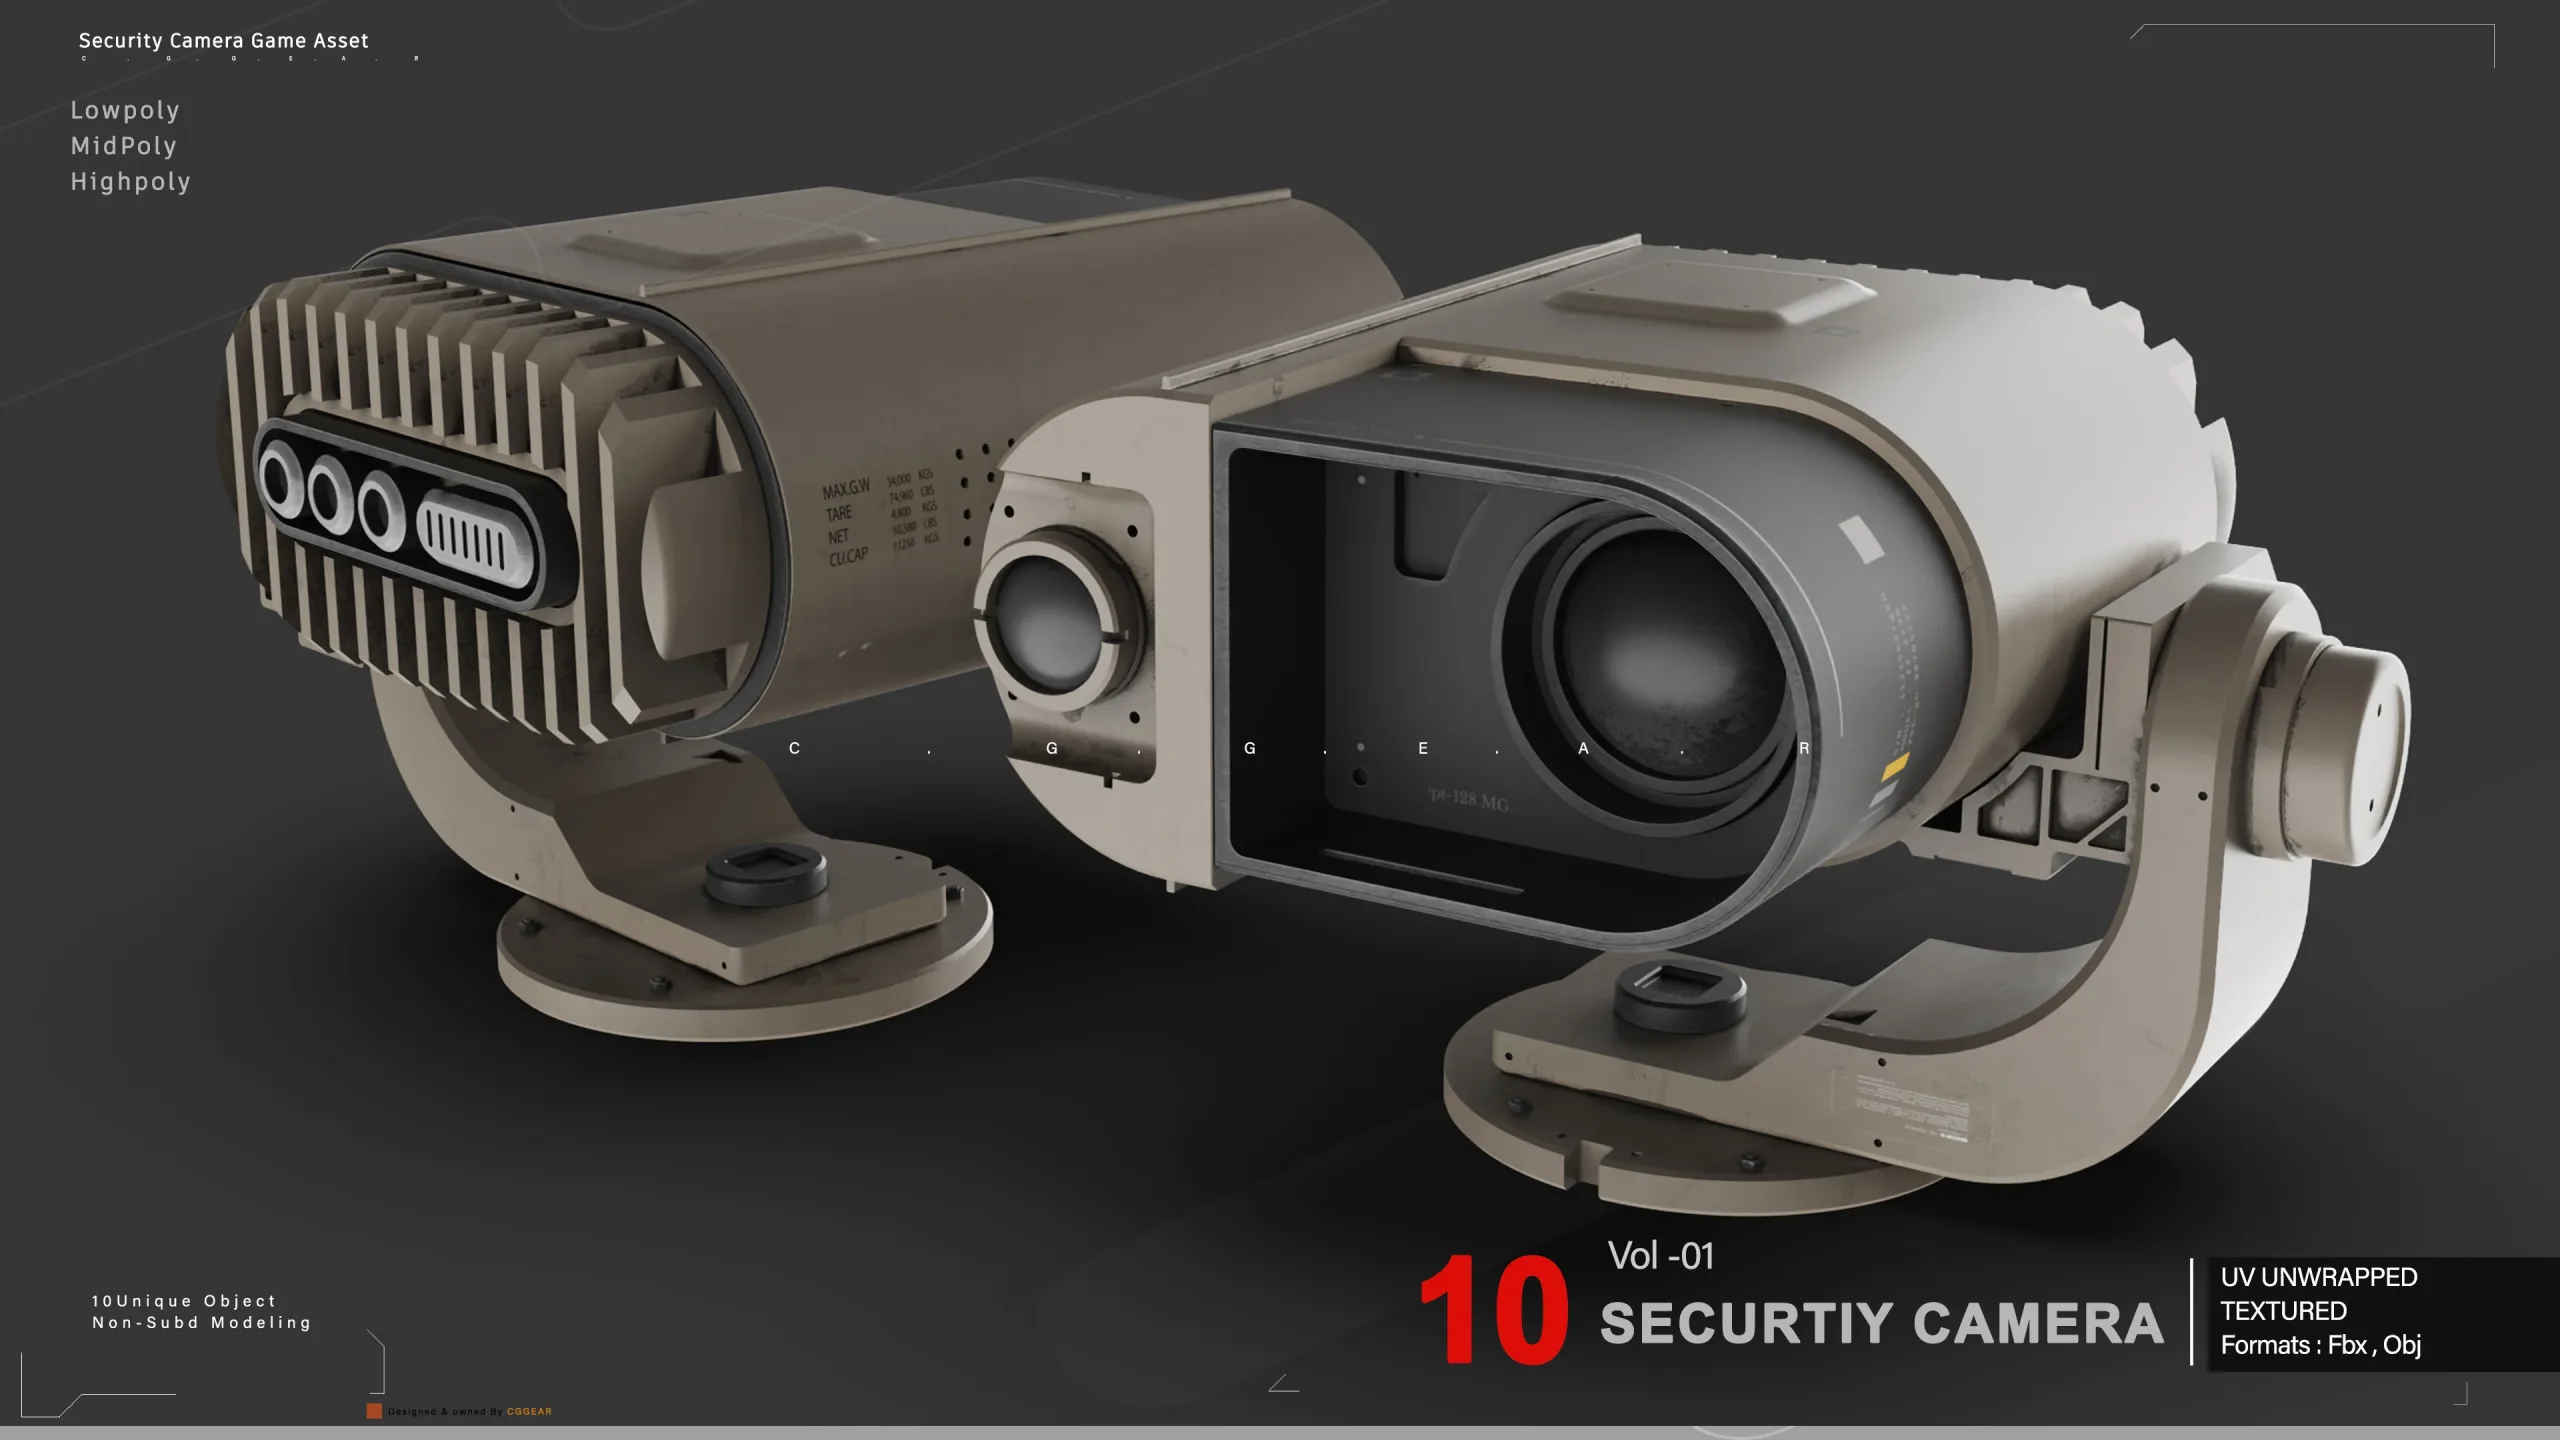 Security Camera VOl 01